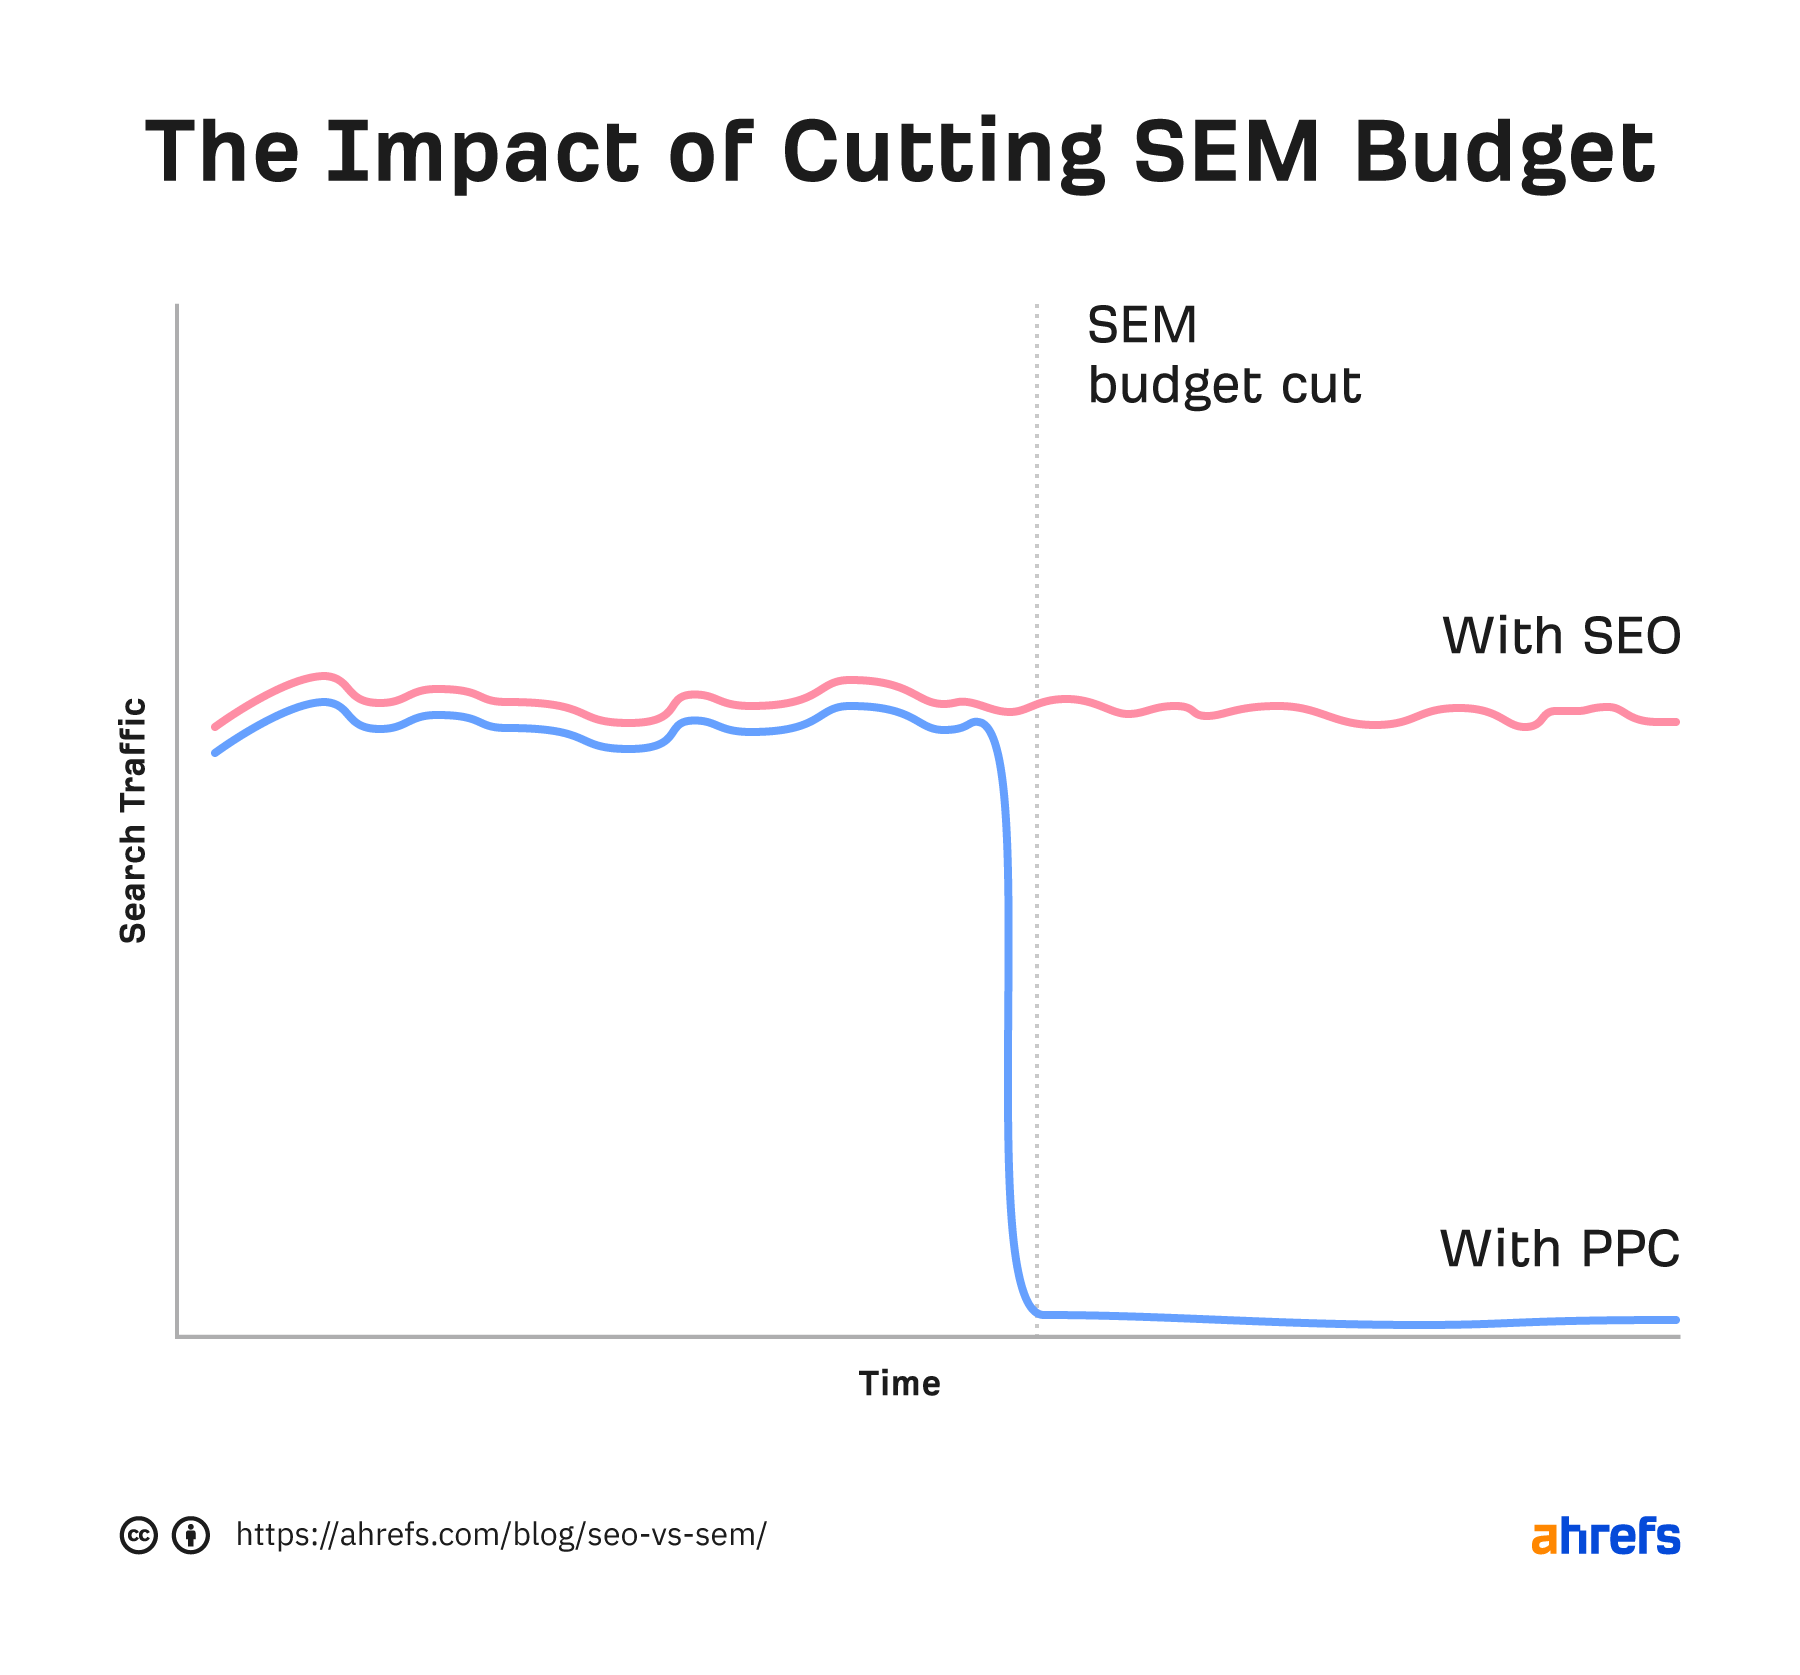 The impact of cutting PPC budget vs. SEO budget